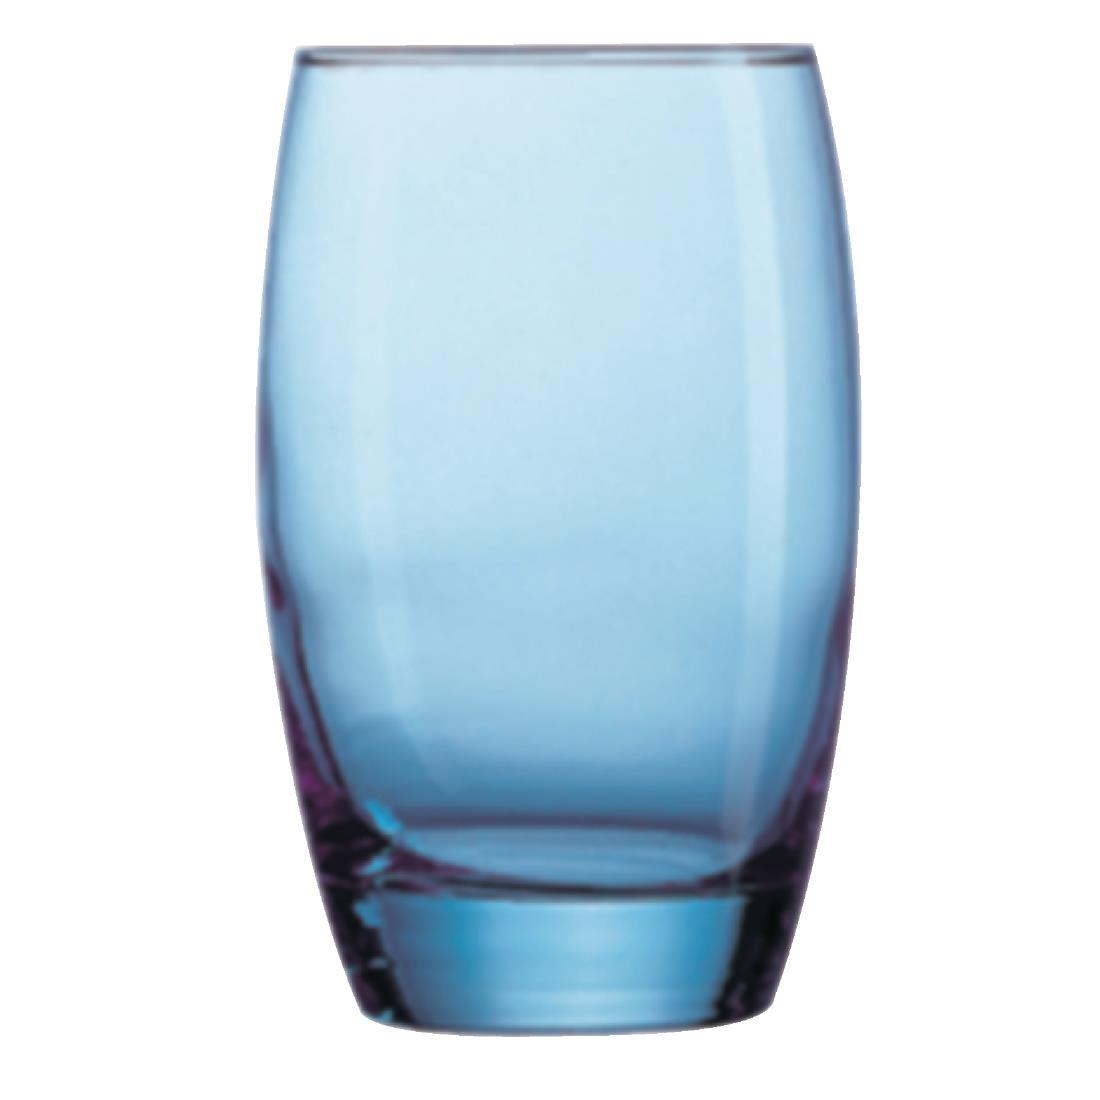 Arcoroc Salto Ice Blue Hi Balls Glasses 350ml (Pack of 24) - CJ483  - 1